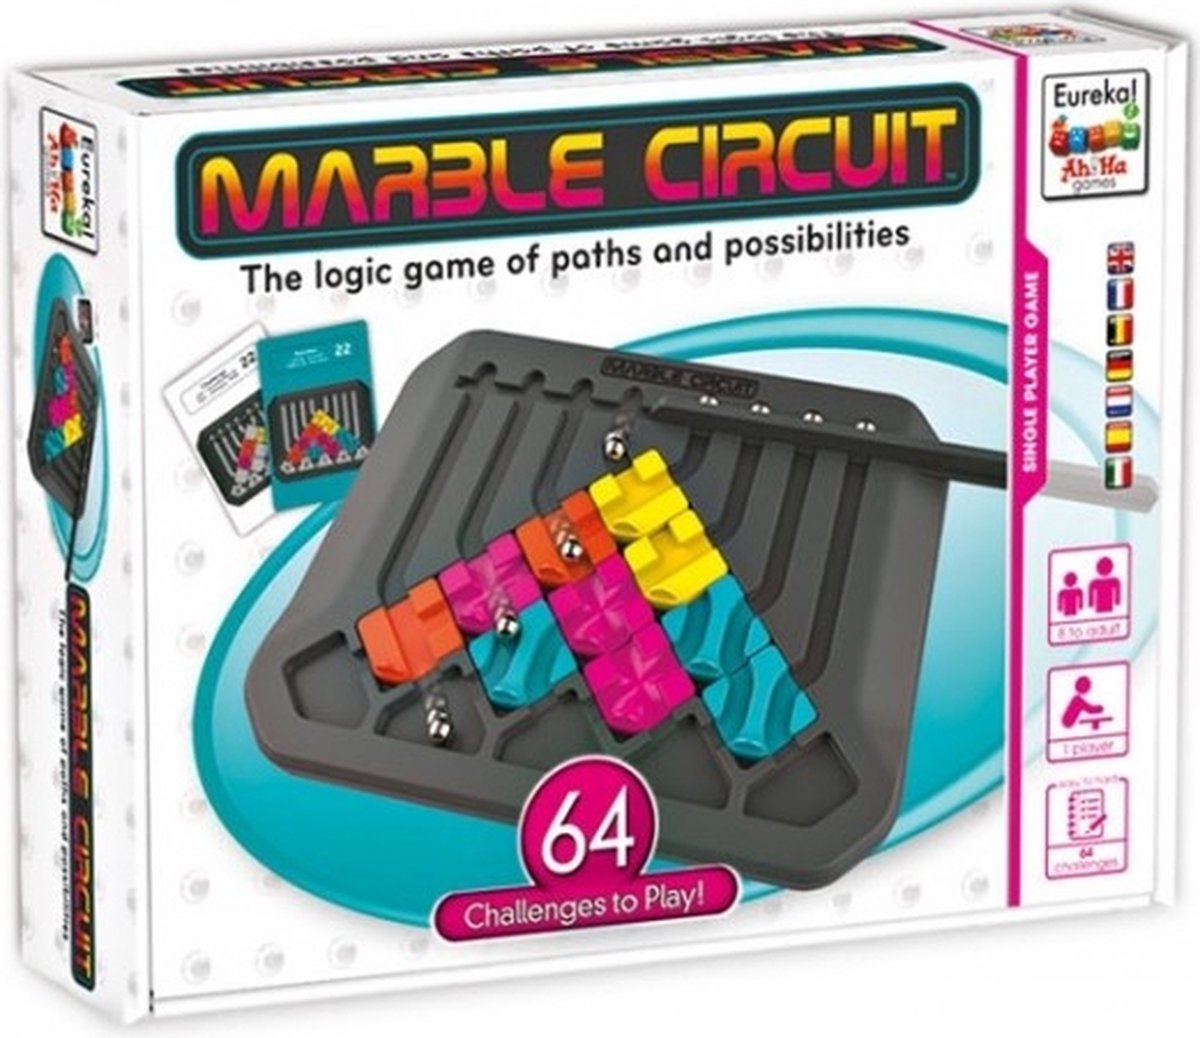 Eureka Ah!Ha Games logica spel Marble Circuit junior 20 delig - Zwart